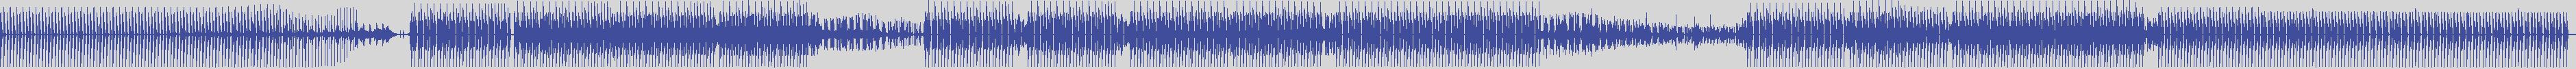 atomic_recordings [AR021] Mike Spaccavento - Stroke [Original Elektro House Mix] audio wave form